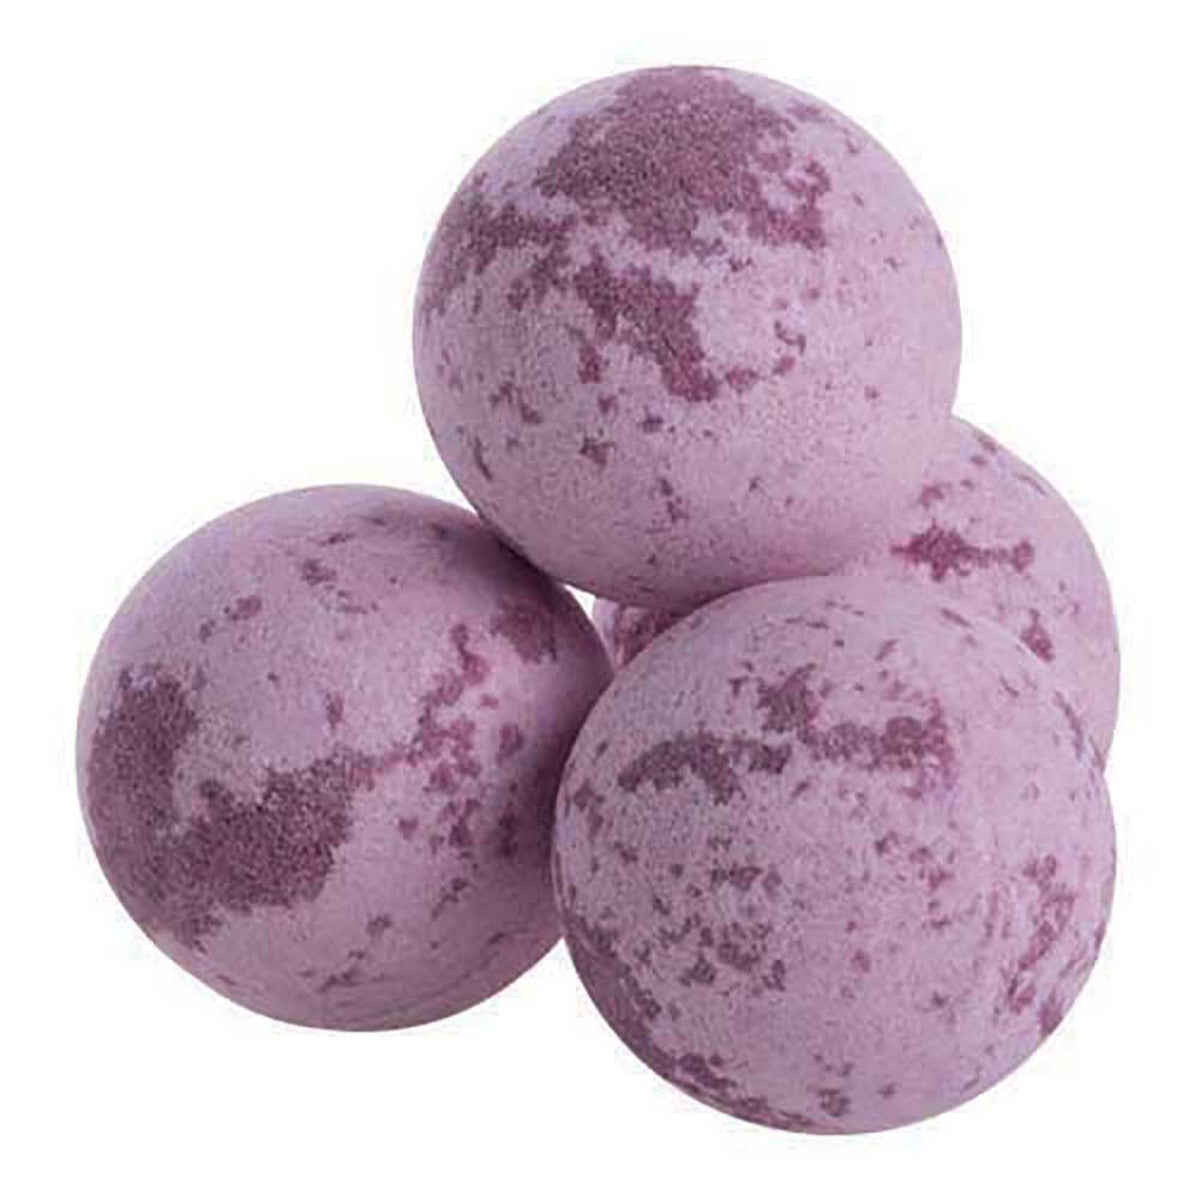 SaltCo - Soakology Magnesium Bath Bomb Lullaby Lavender